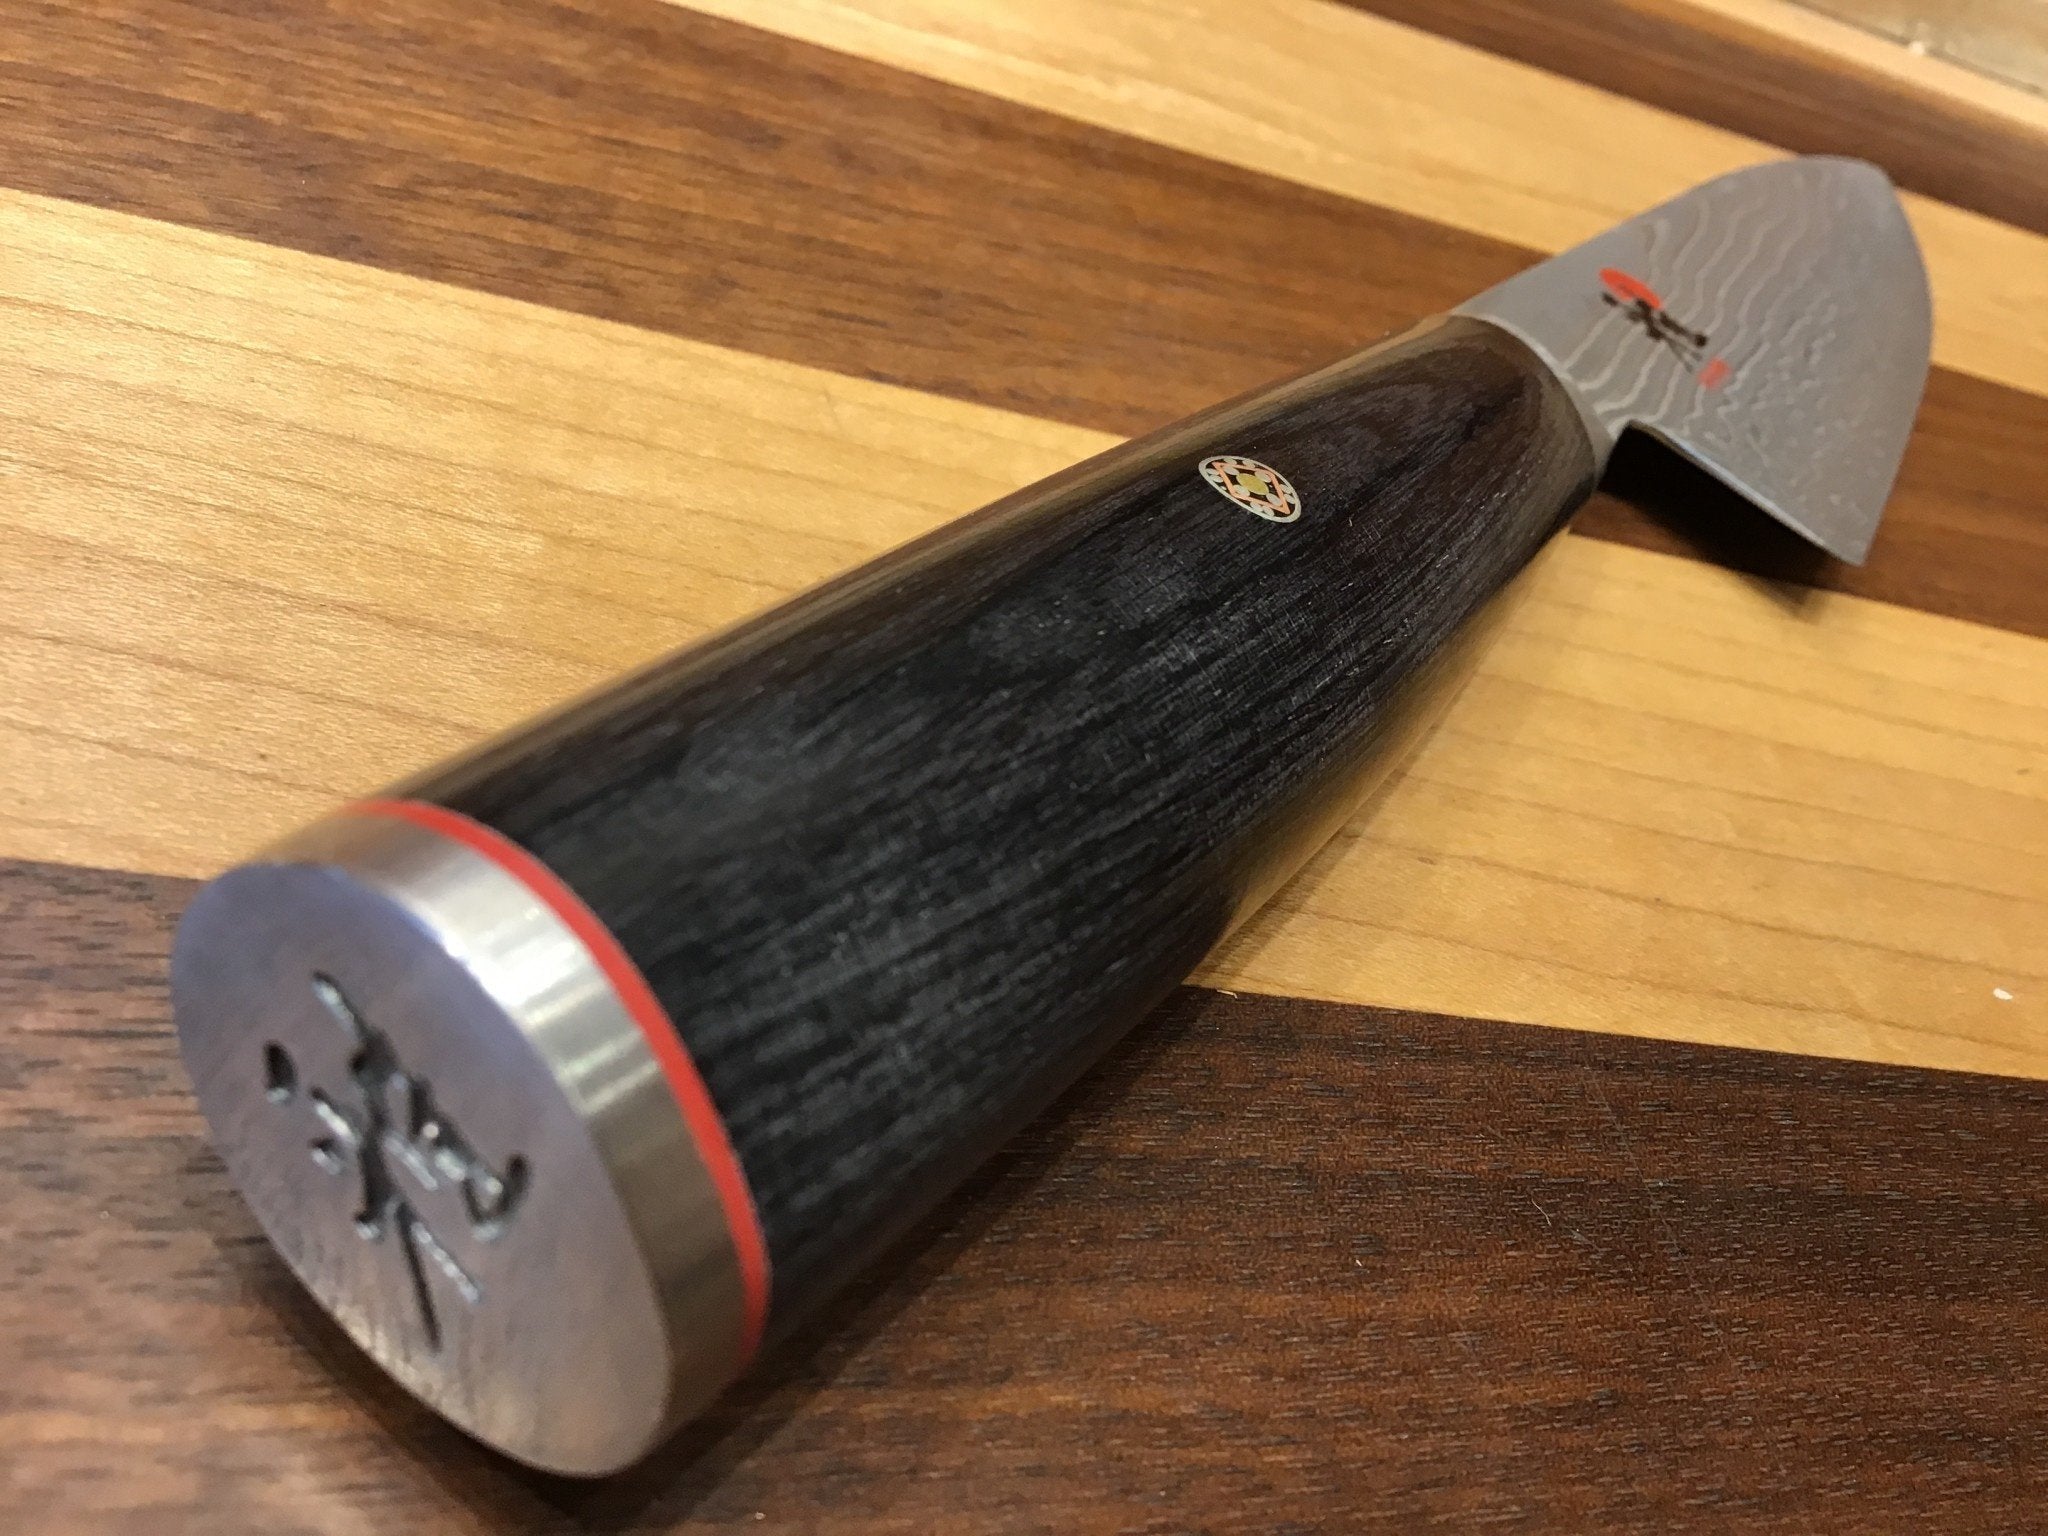 Miyabi Kaizen II 6” Chef’s Knife 5000FC-D